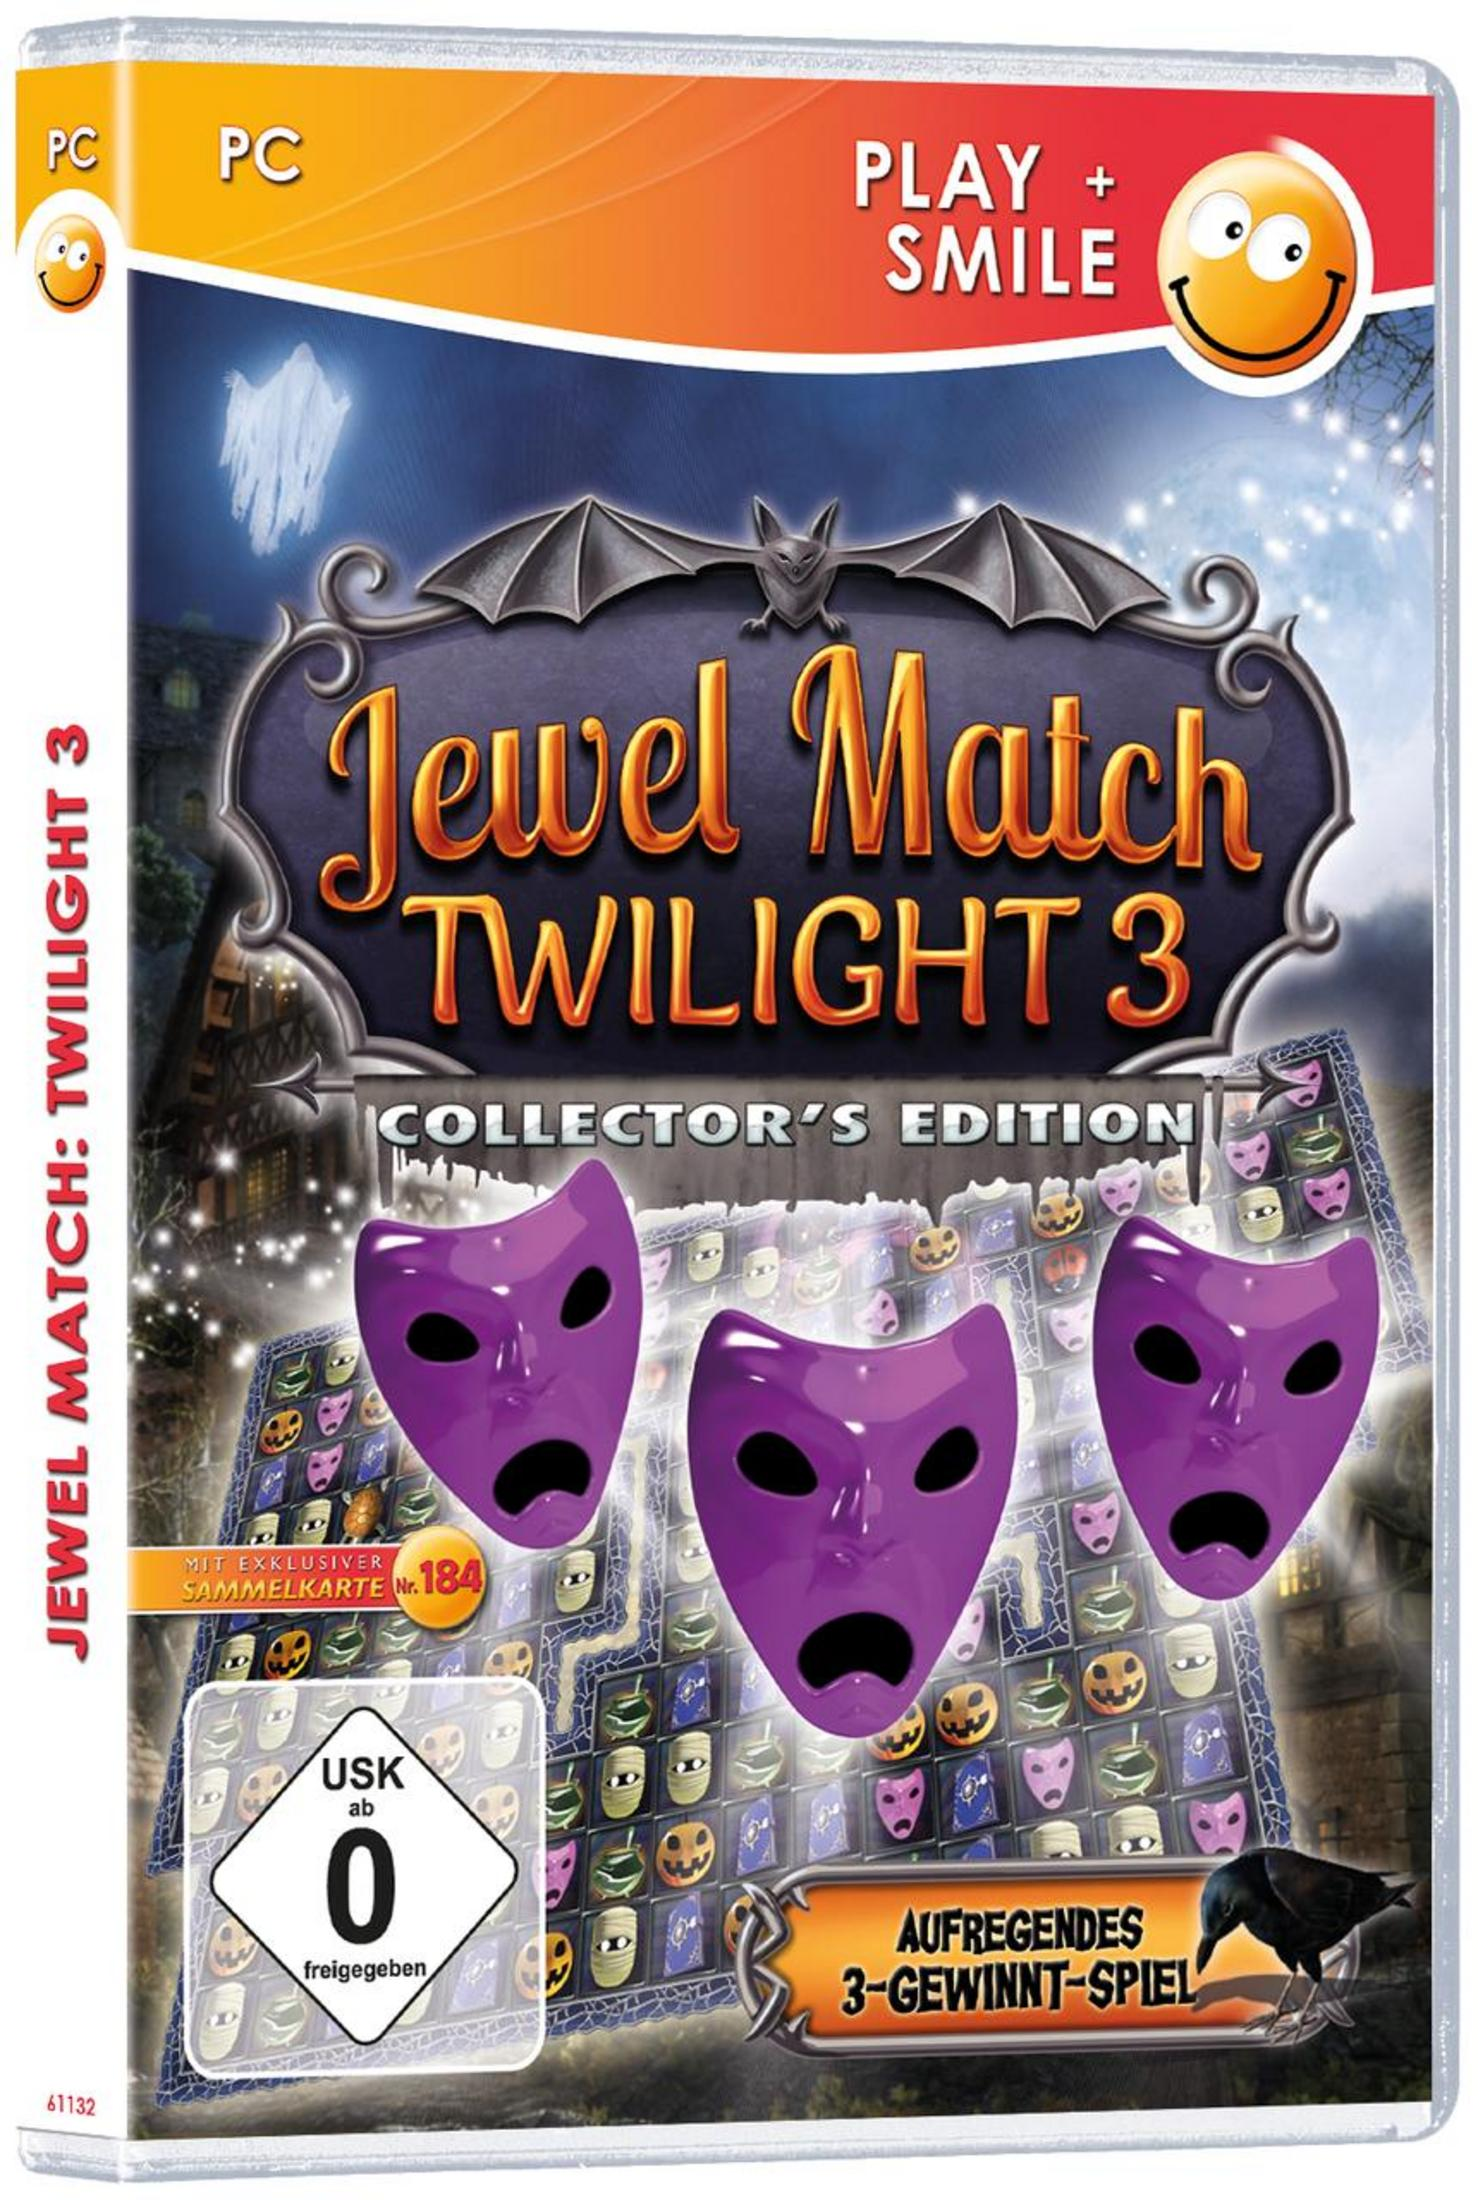 JEWEL S - [PC] 3 MATCH-TWILIGHT EDITION) (COLLECTOR